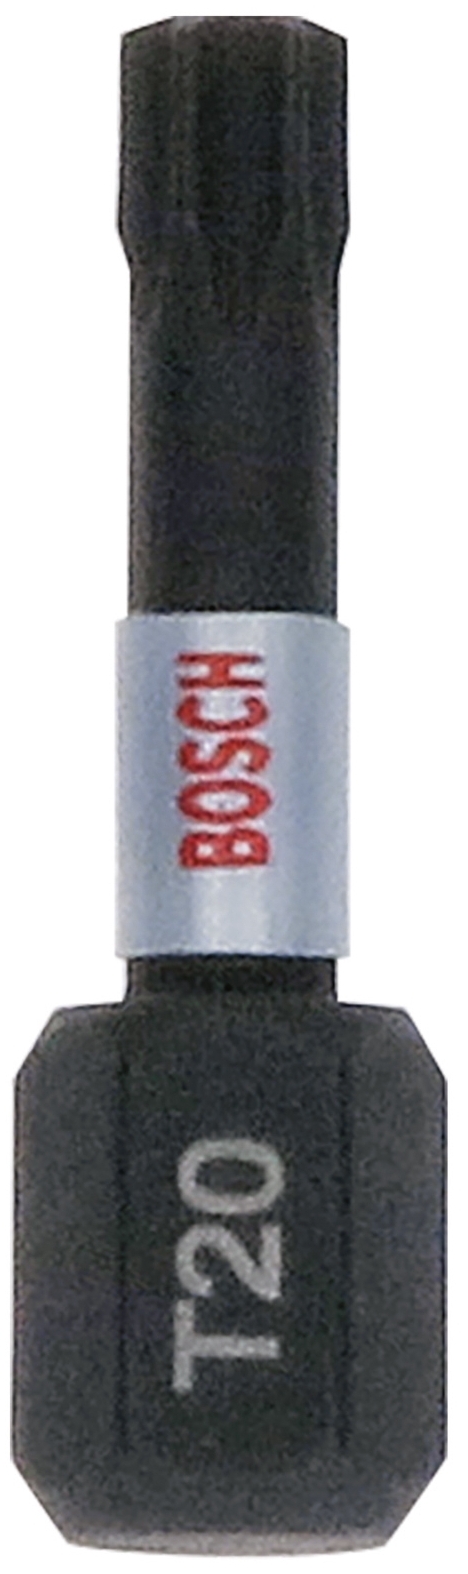 Bit šroubovací Bosch Impact Control T20 25 mm 25 ks